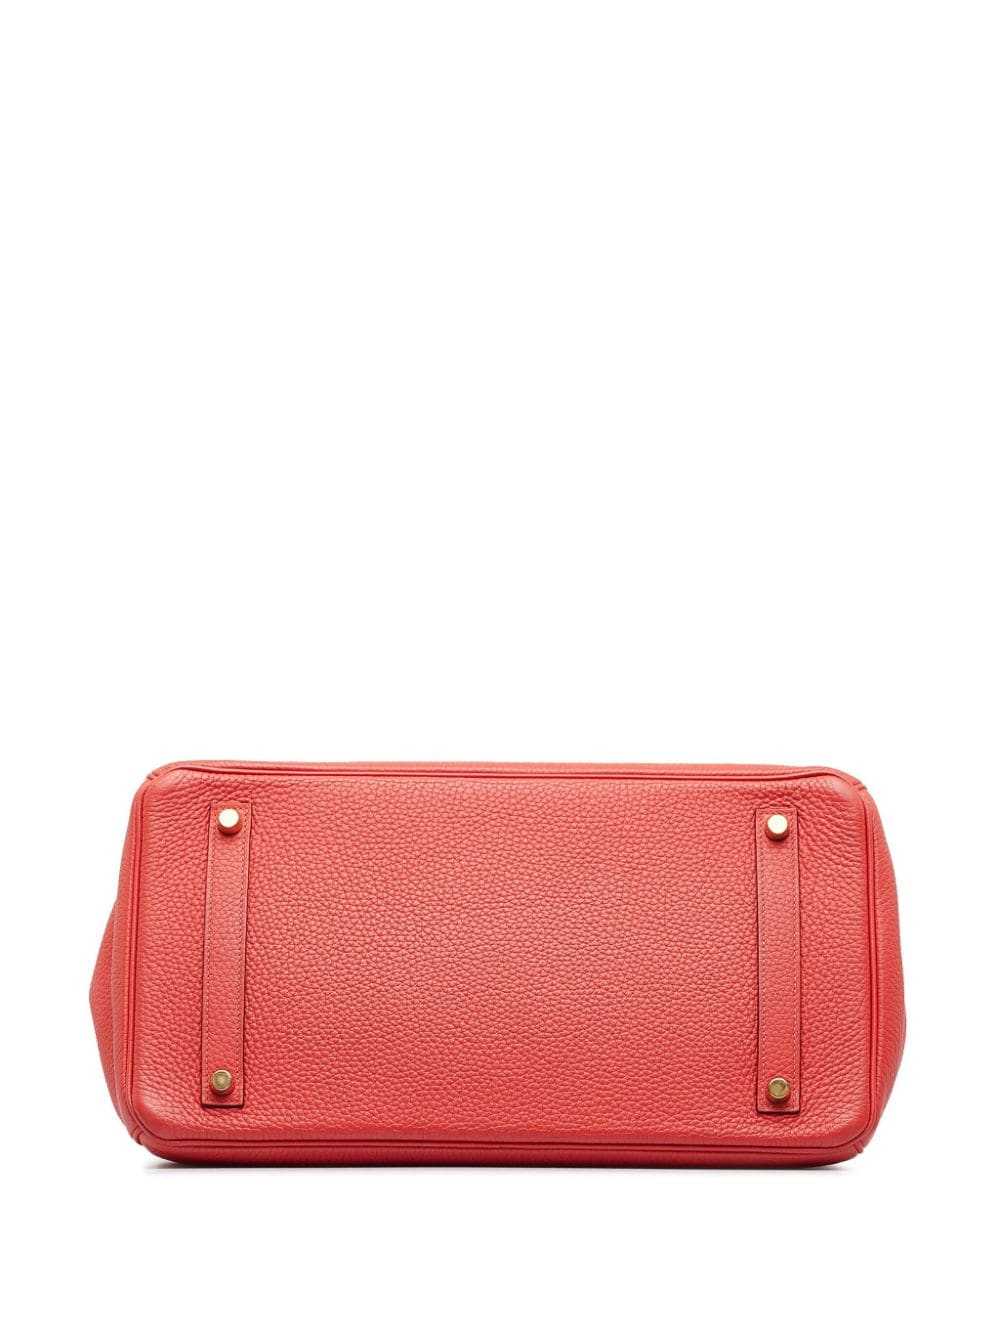 Hermès Pre-Owned 2014 Togo Birkin 35 handbag - Red - image 4